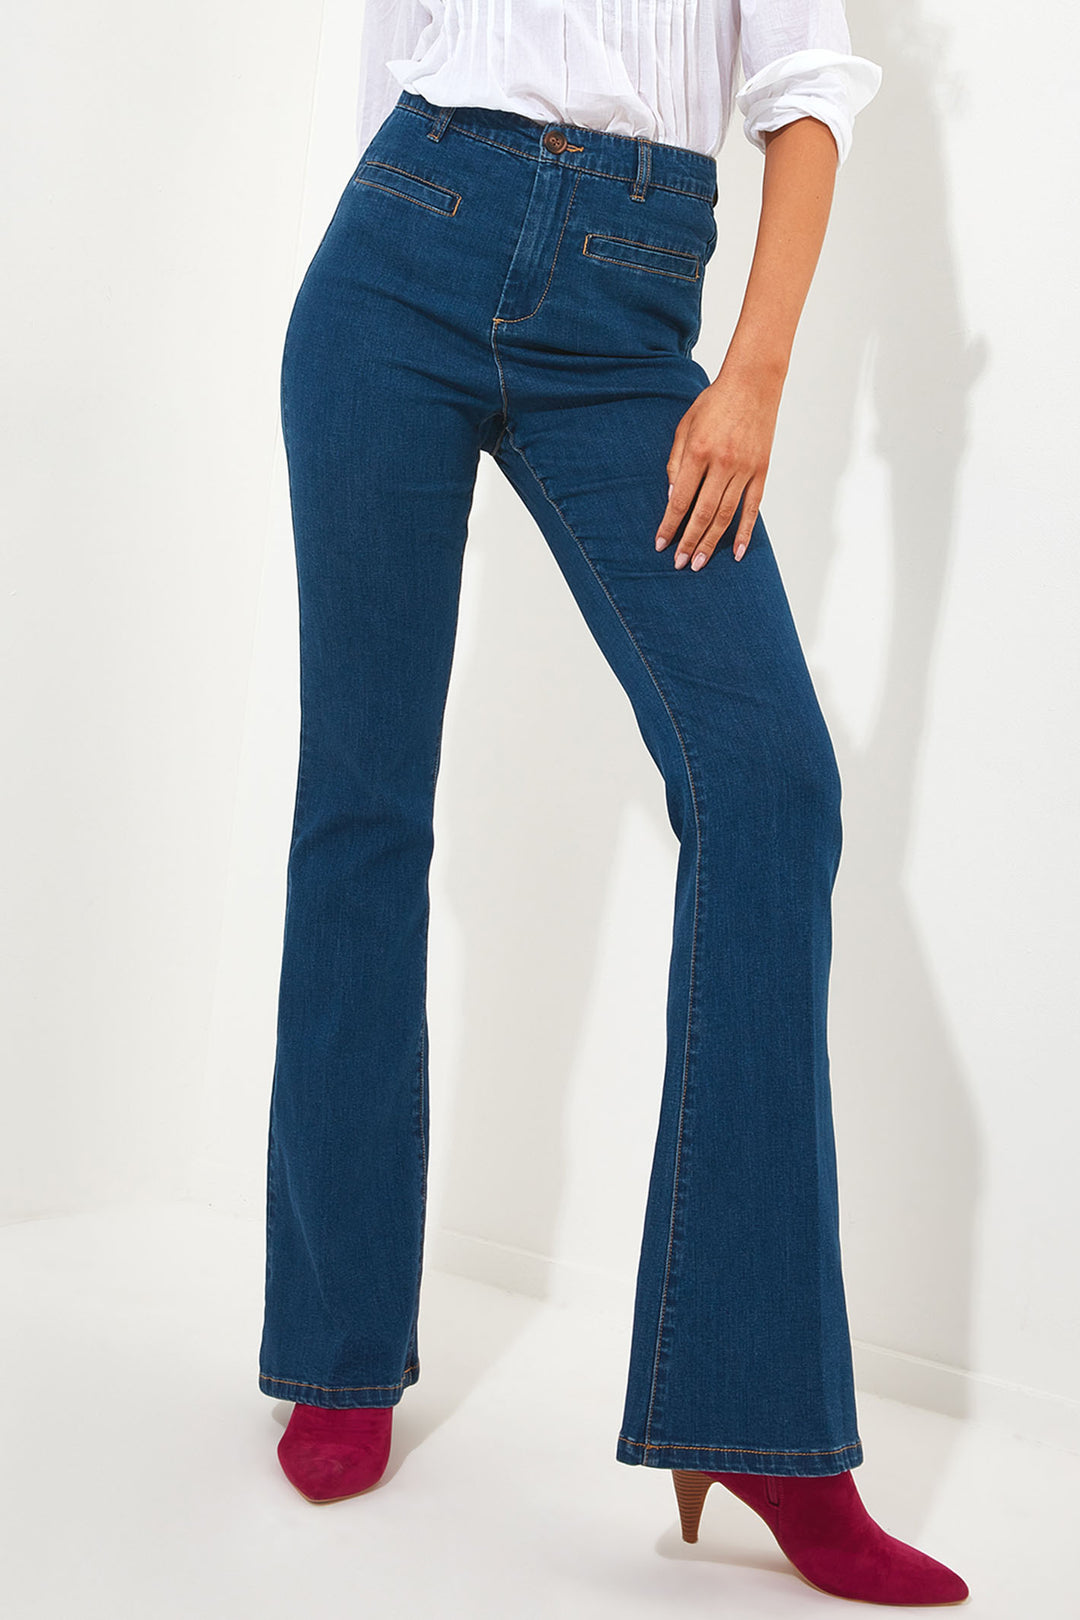 Joe Browns WB487A Aurora Blue Denim Flared Trousers - Experience Boutique